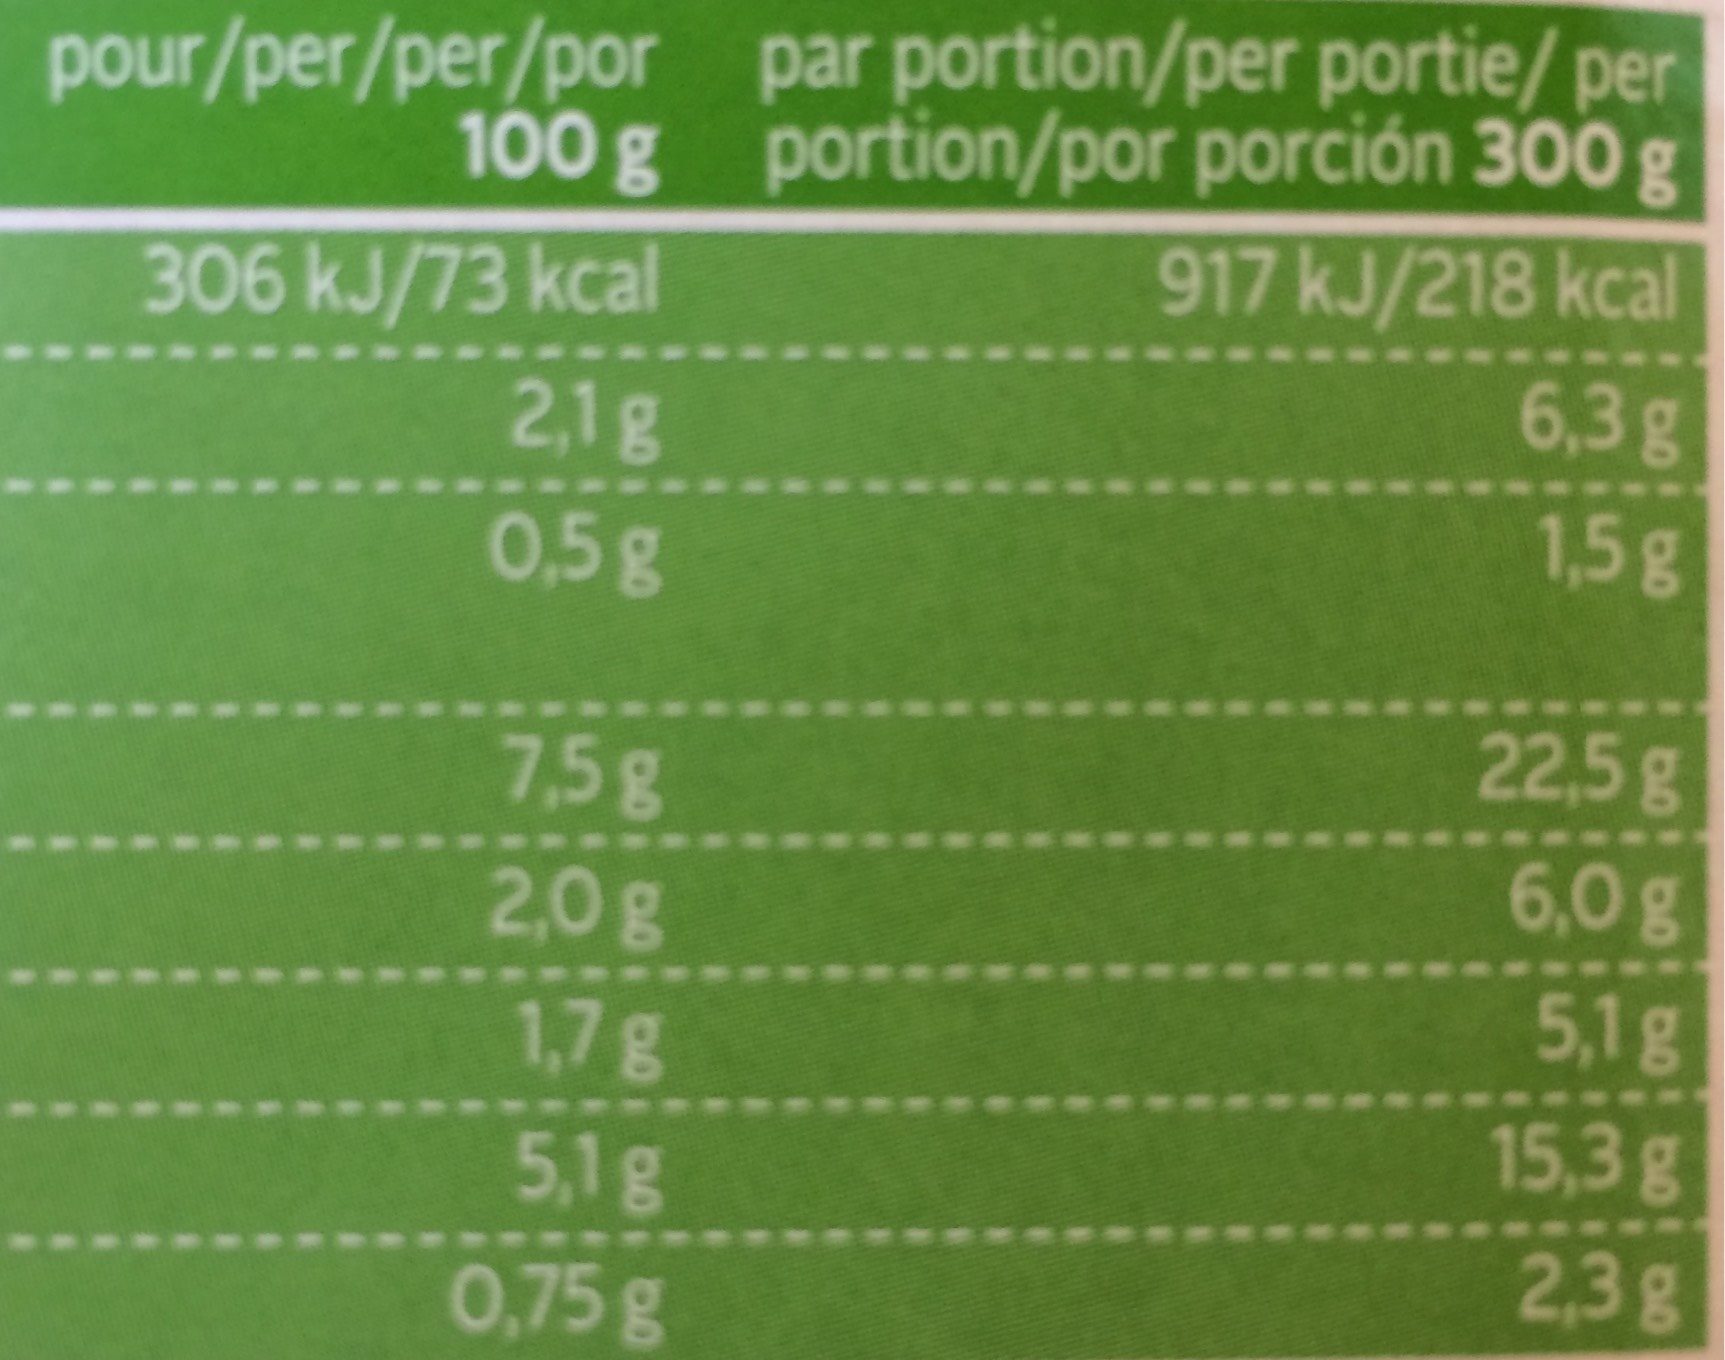 Beef a la provencale - Nutrition facts - fr